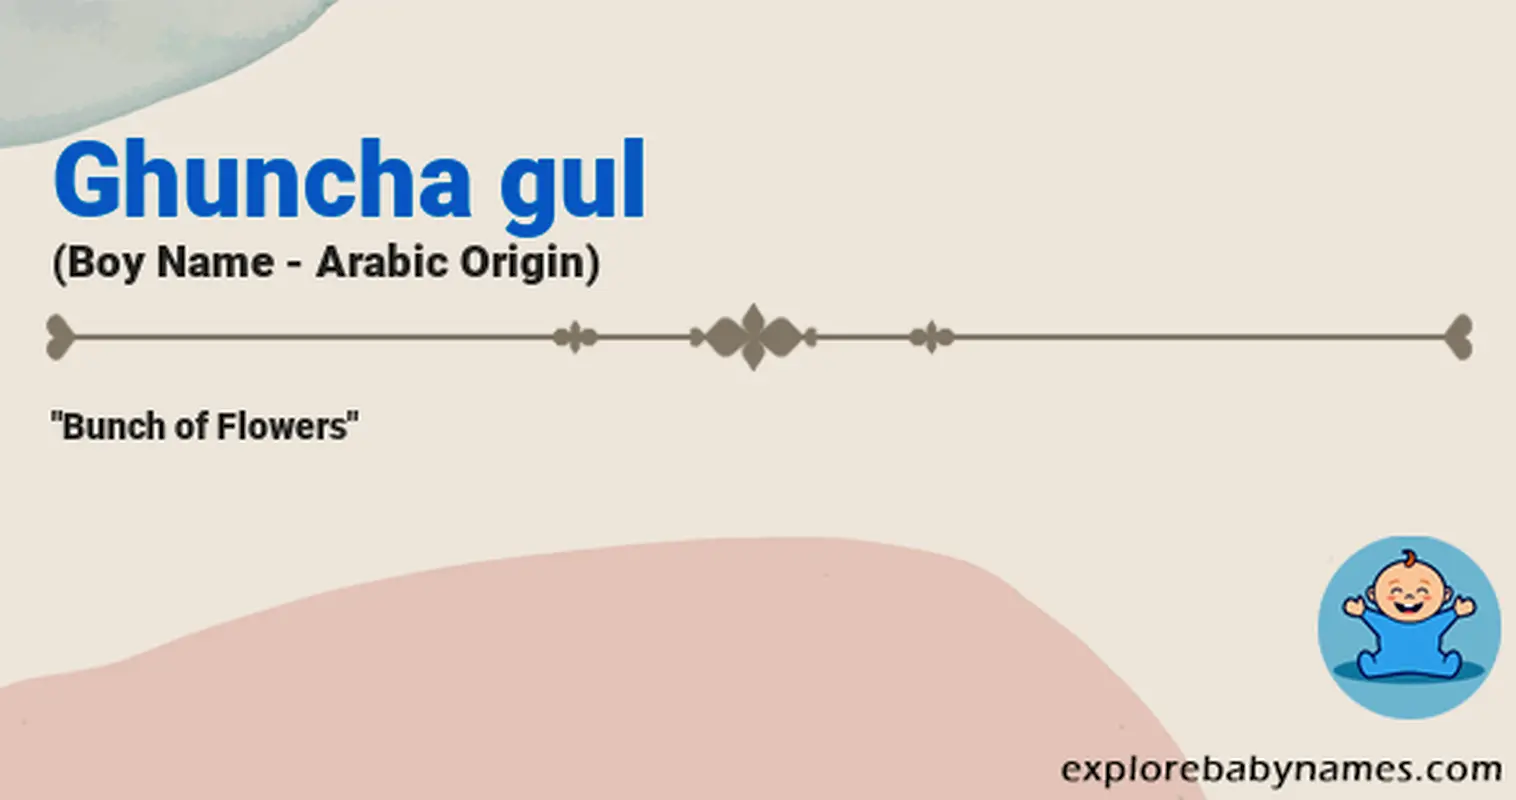 Meaning of Ghuncha gul